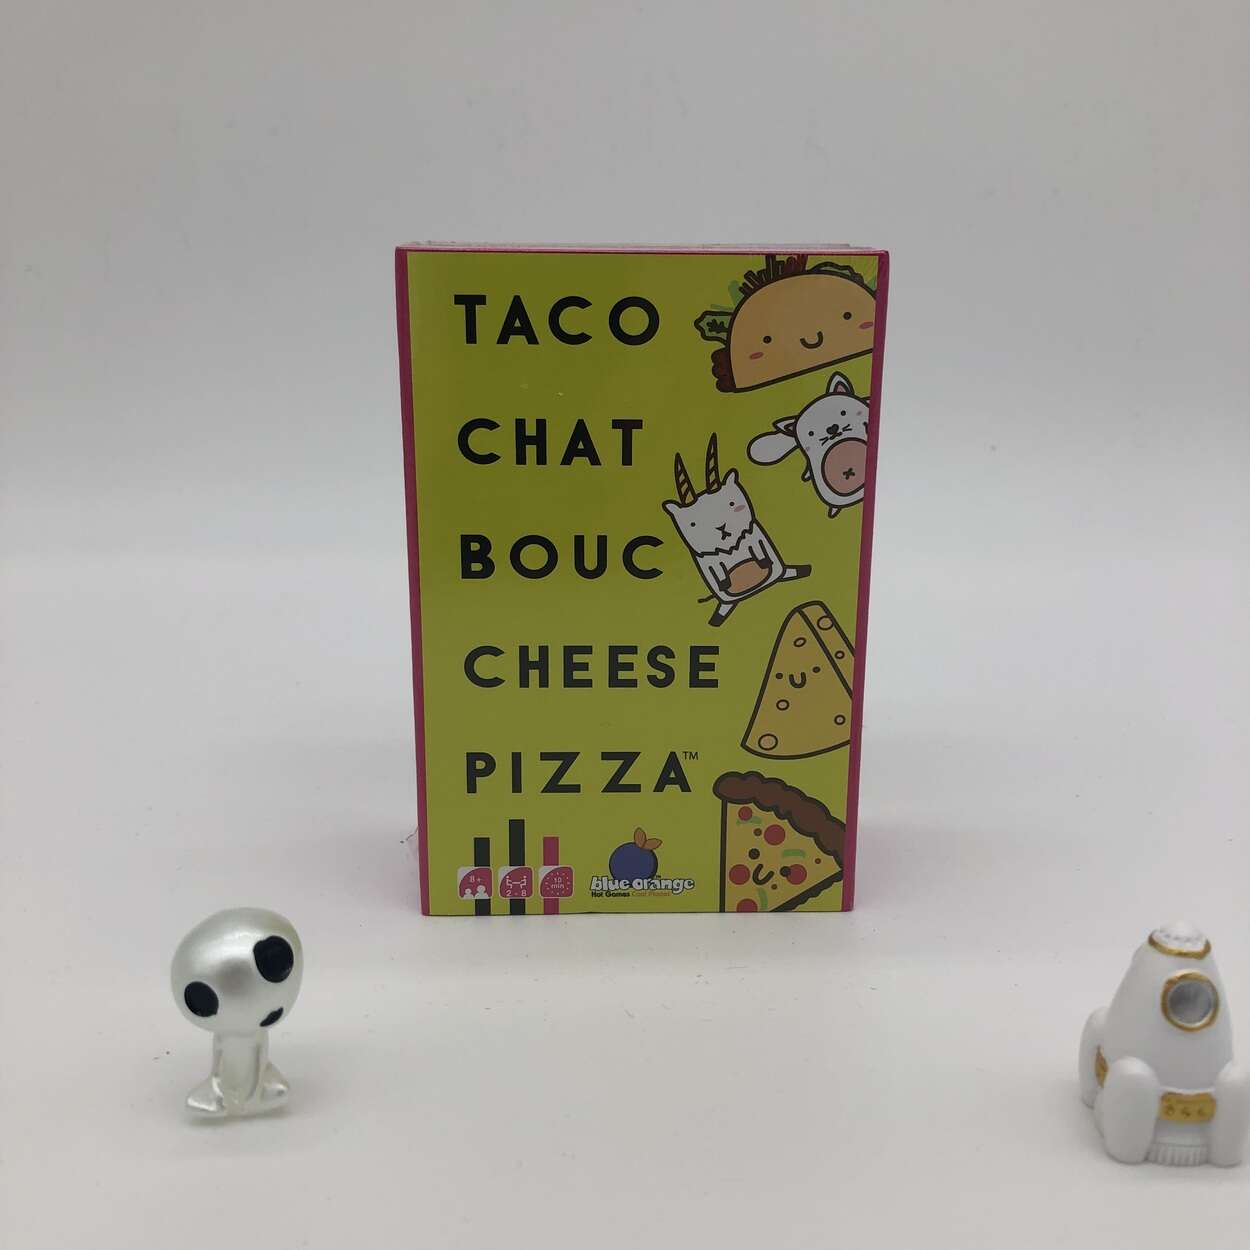 Taco chat bouc cheeze pizza